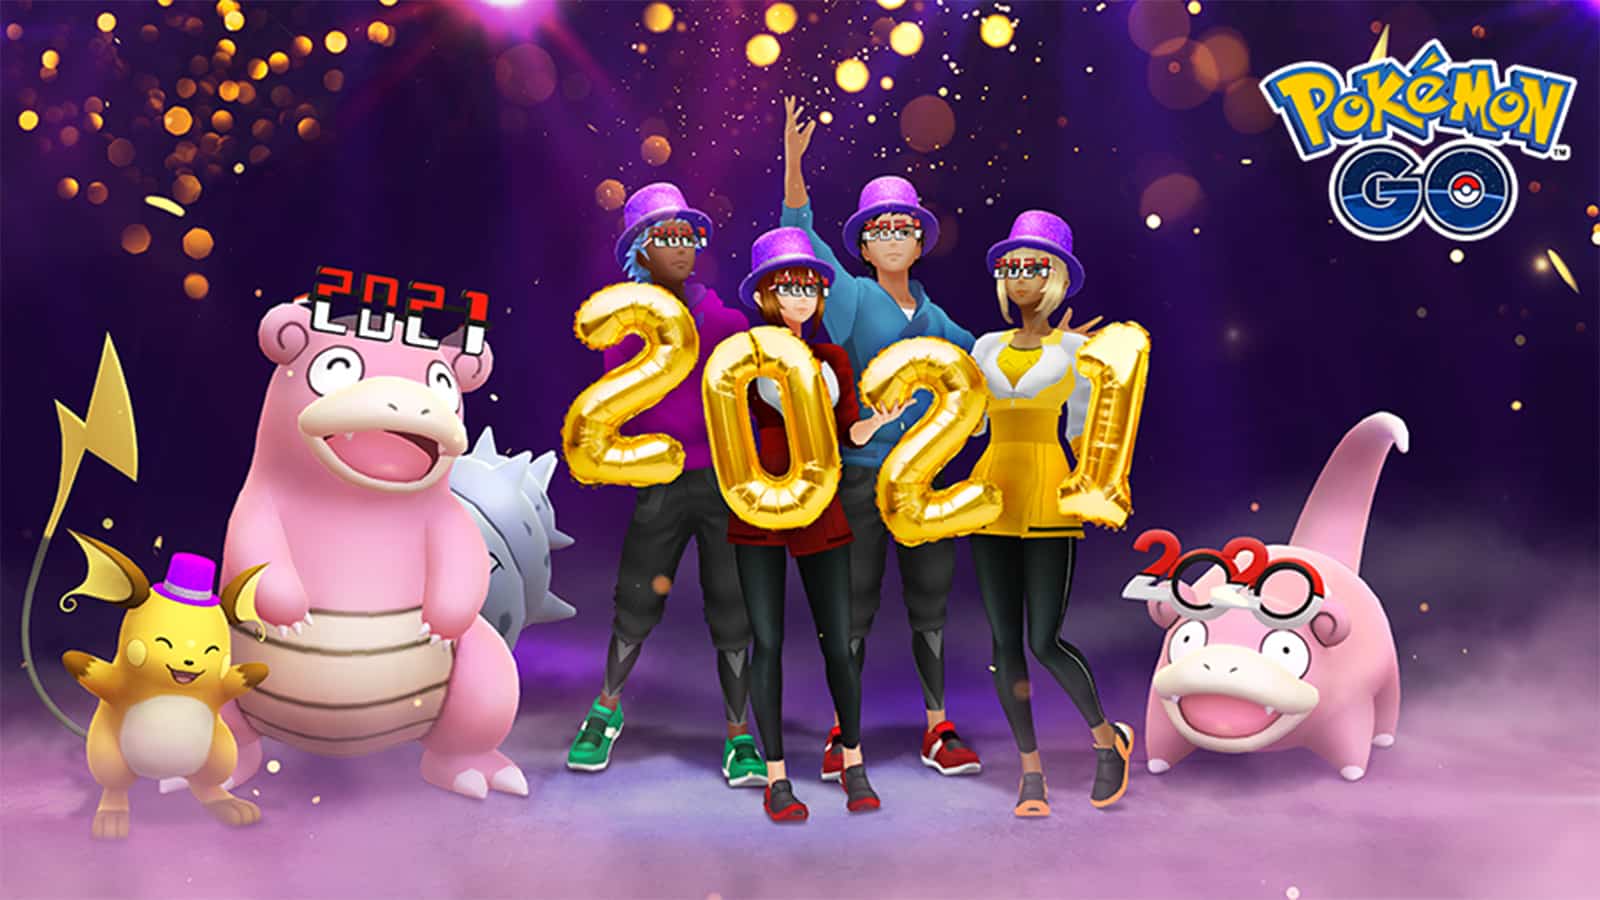 Pokemon Go 2021 NYE event